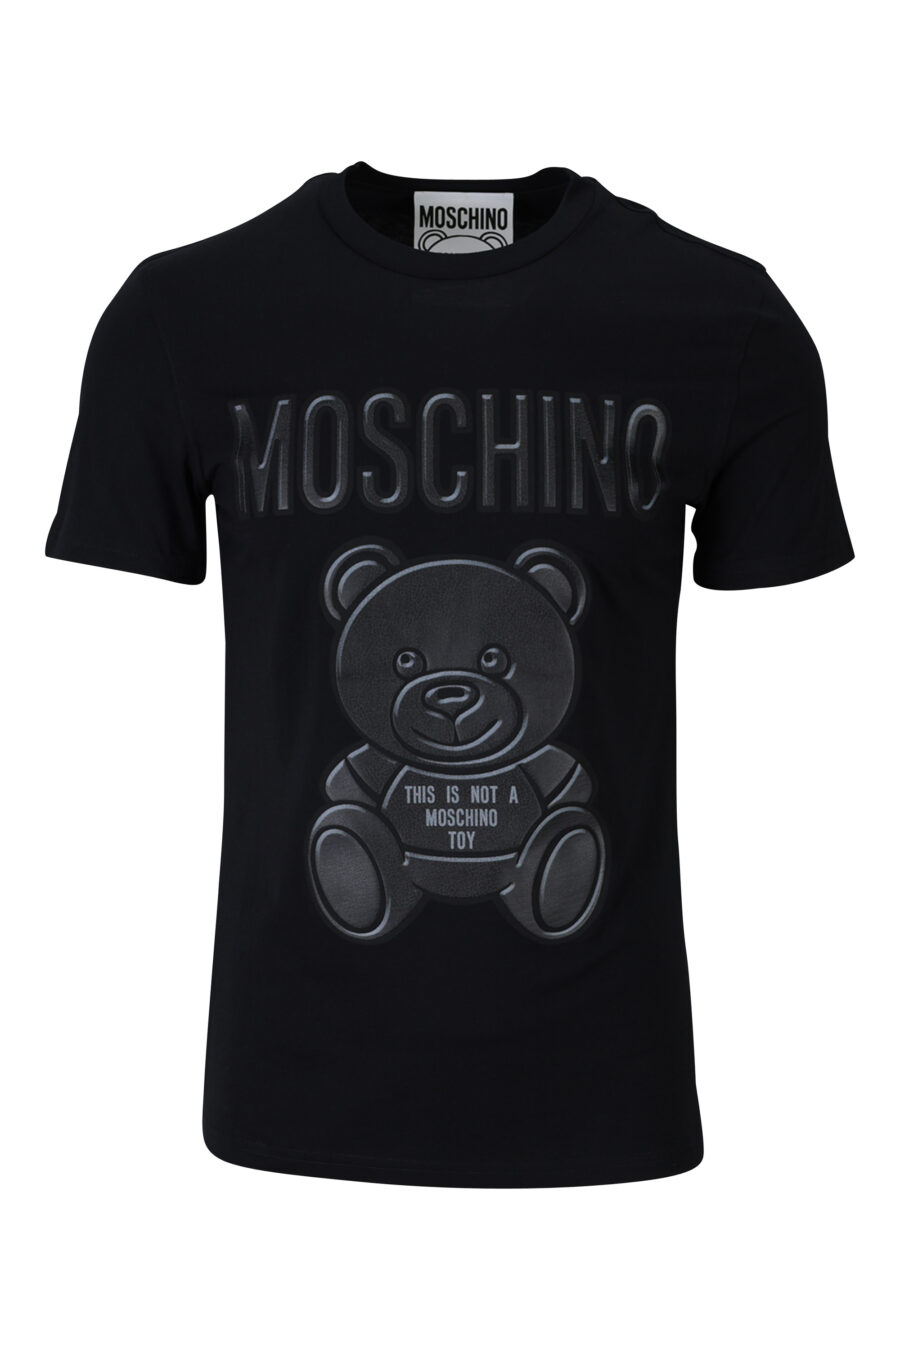 Black organic cotton t-shirt with "teddy" maxilogo - 889316854589